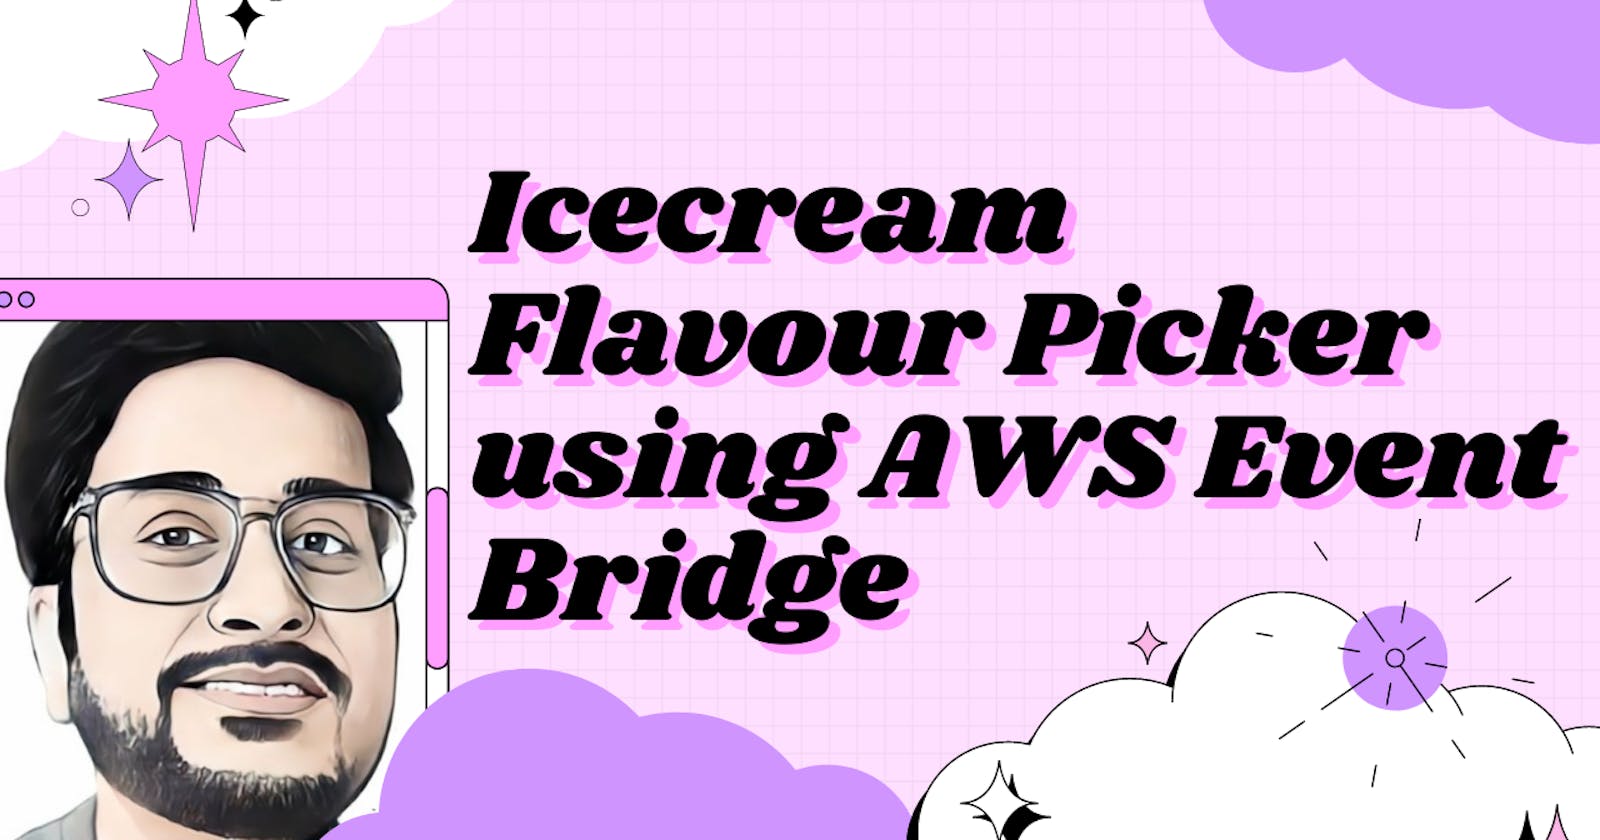 Icecream Flavour Picker using AWS Event Bridge